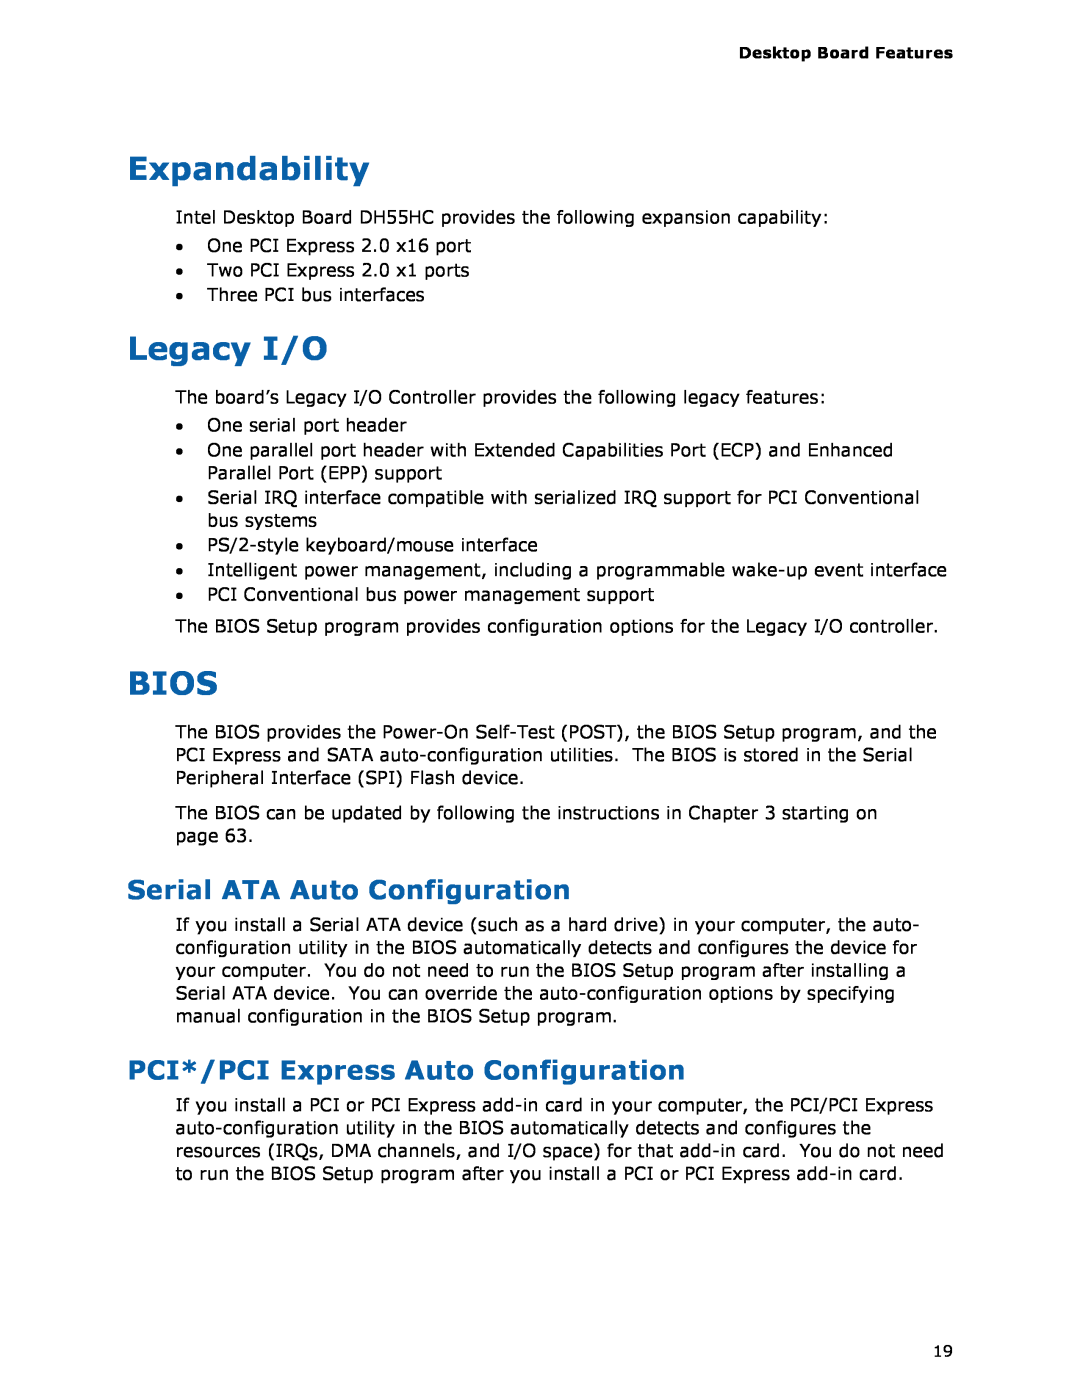 Intel BOXDH55HC manual Expandability, Legacy I/O, Bios, Serial ATA Auto Configuration, PCI*/PCI Express Auto Configuration 